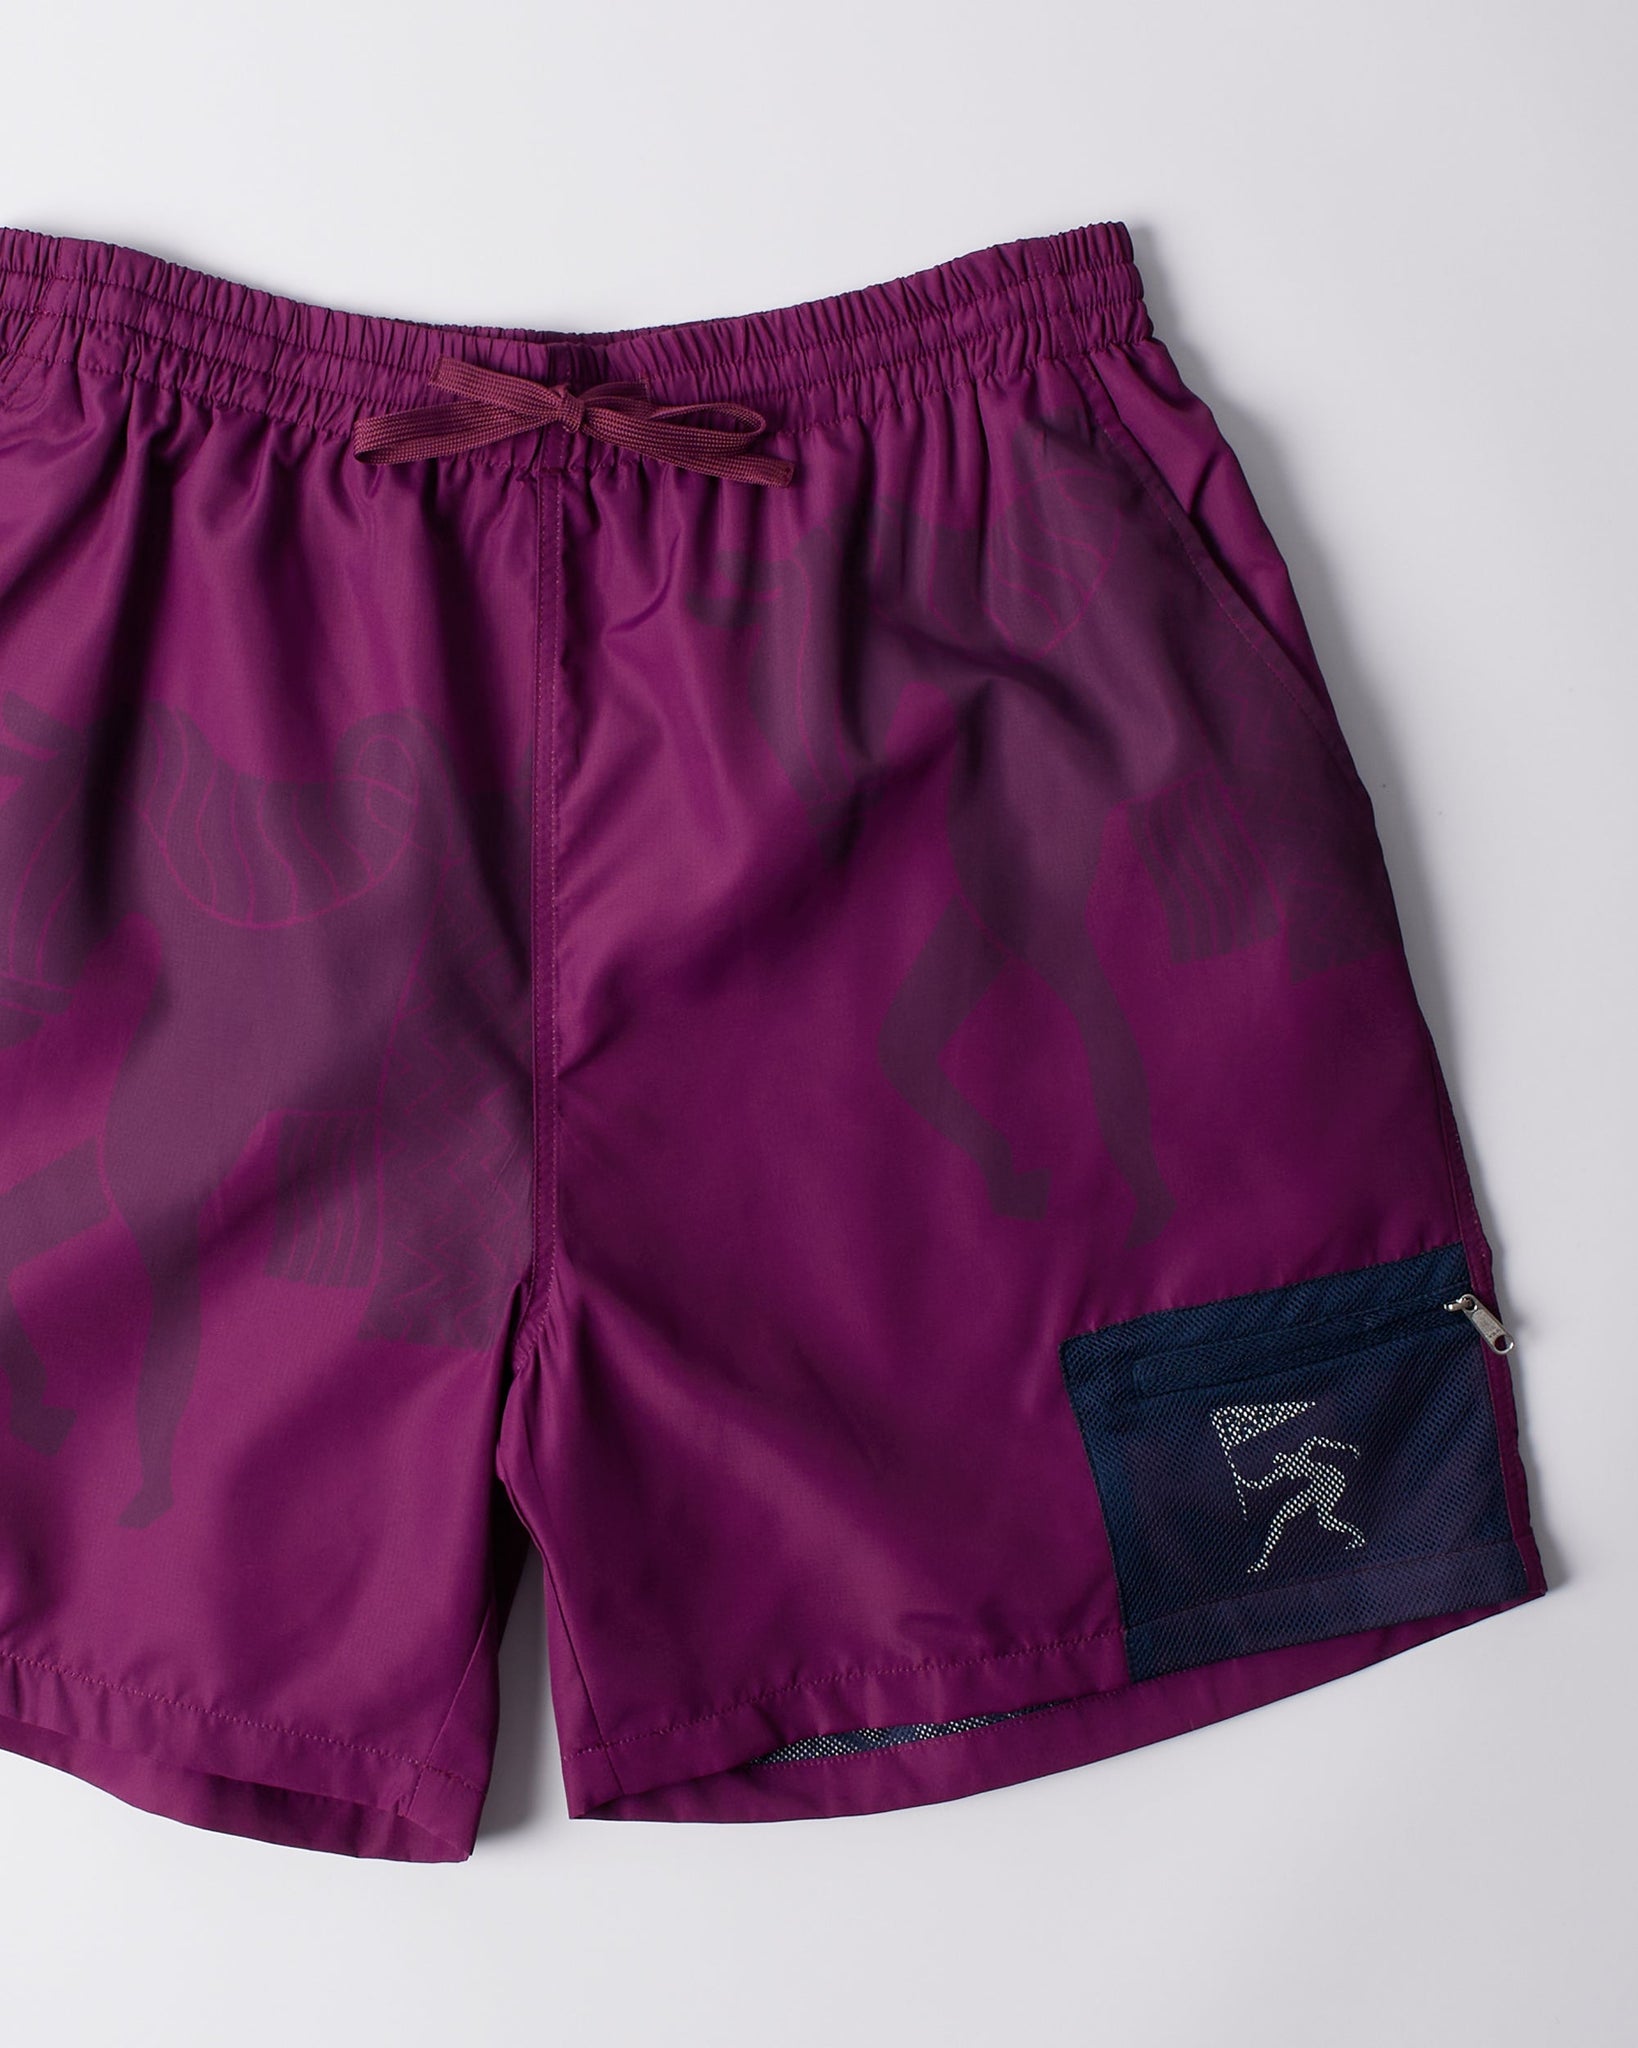 Short horse shorts - tyrian purple